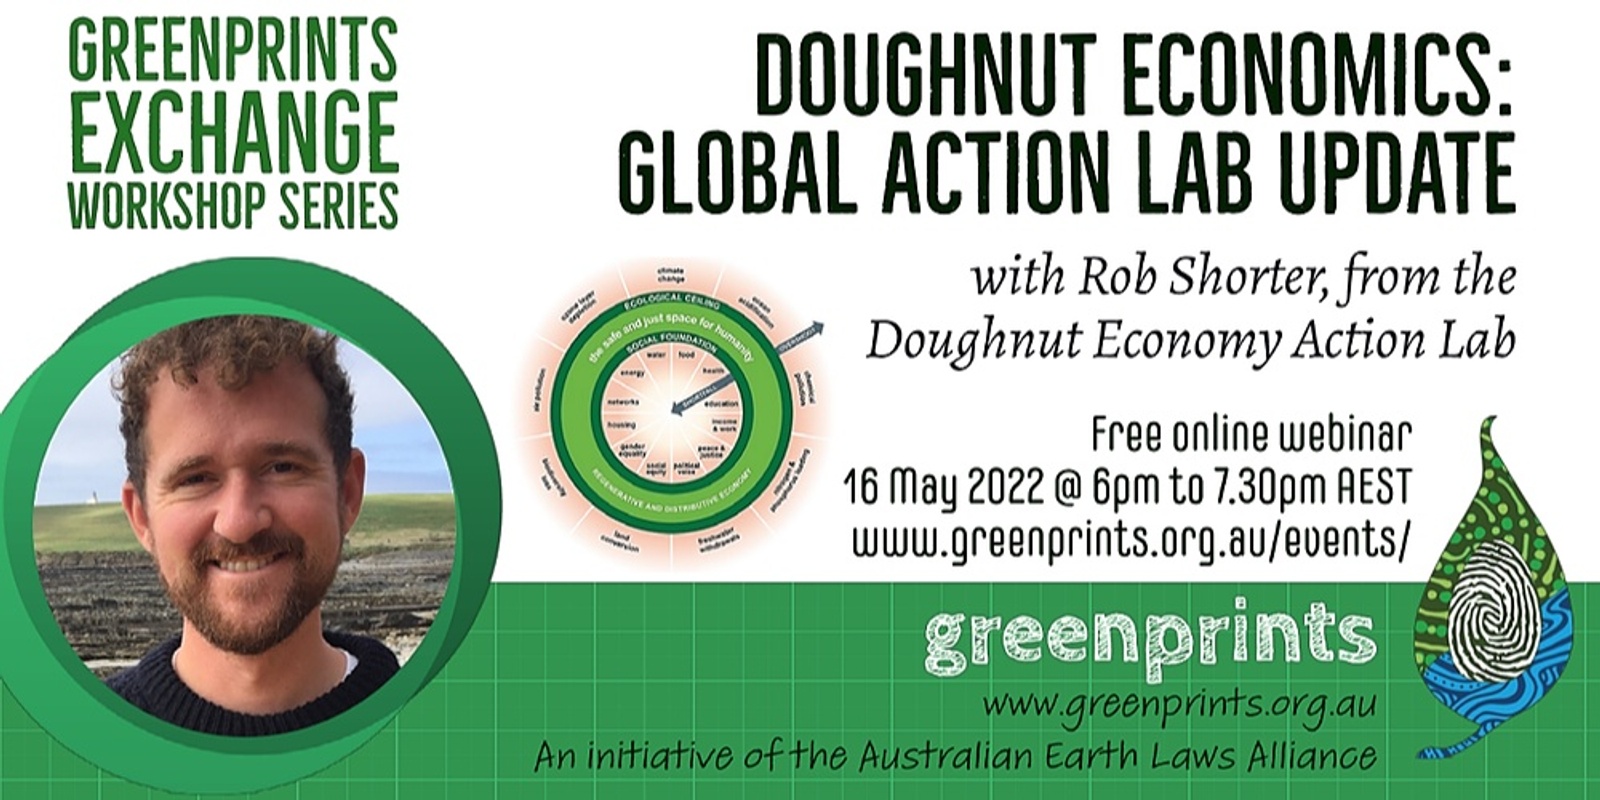 Doughnut Economics - Global Action Lab Update